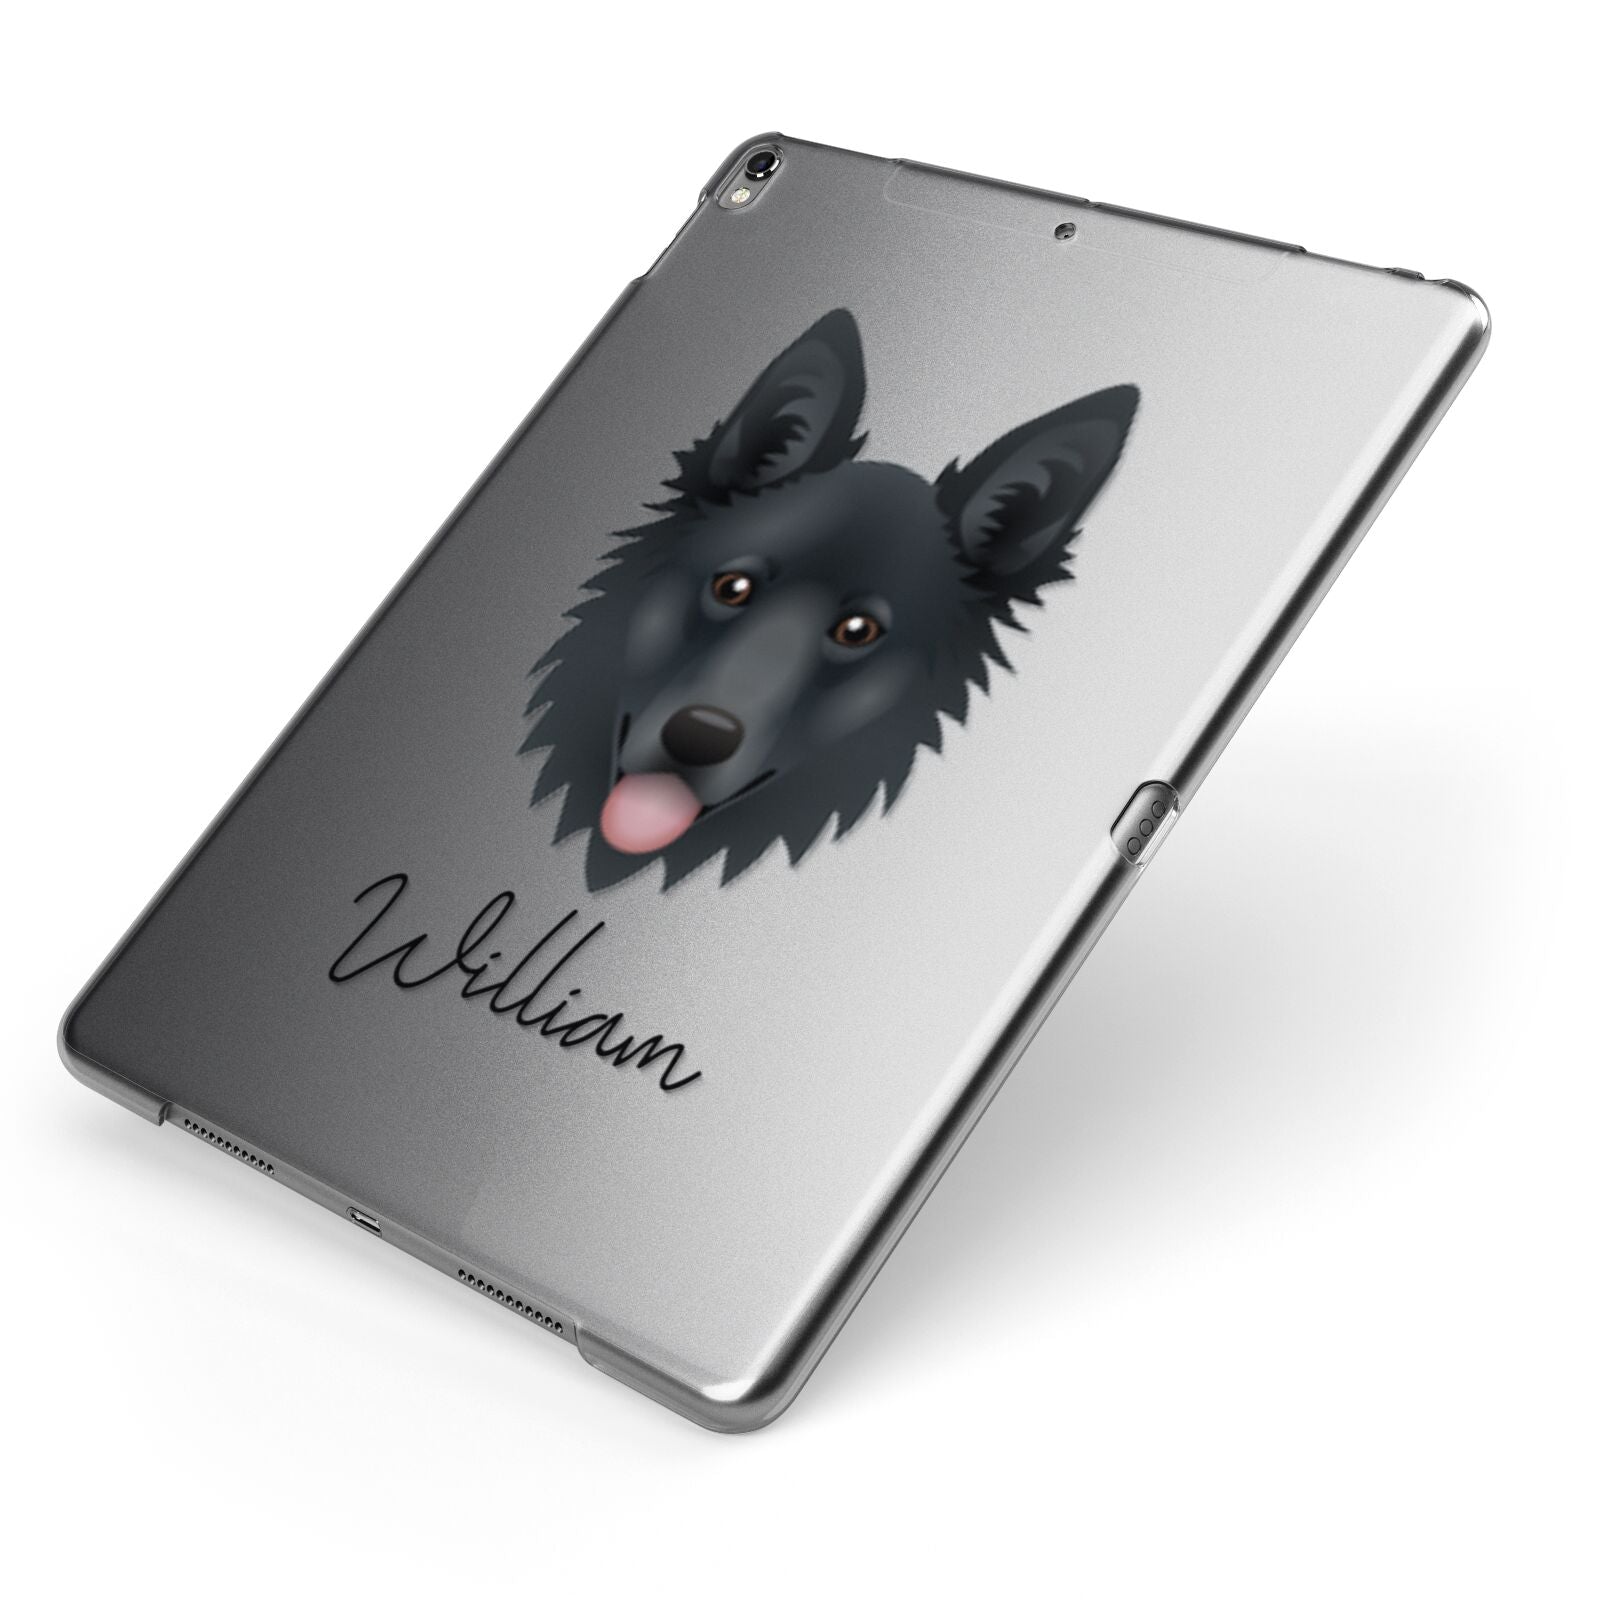 Golden Shepherd Personalised Apple iPad Case on Grey iPad Side View